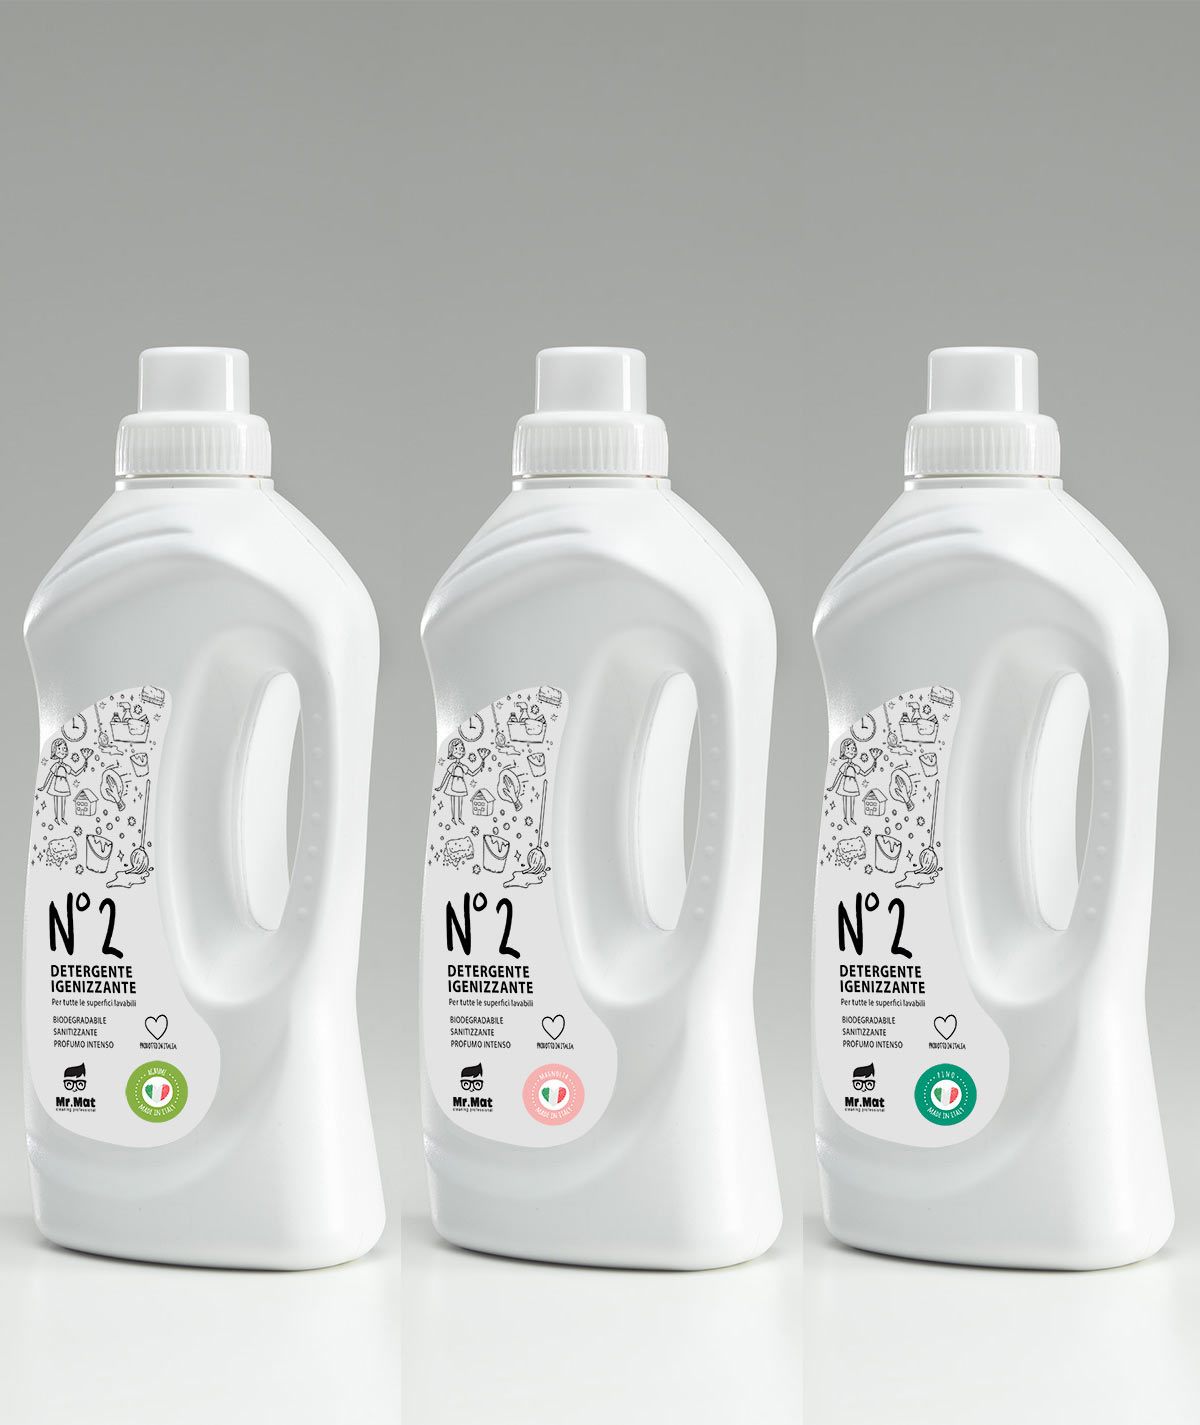 Tris Detergente Professionale Superfici N°2 – Mr MAT